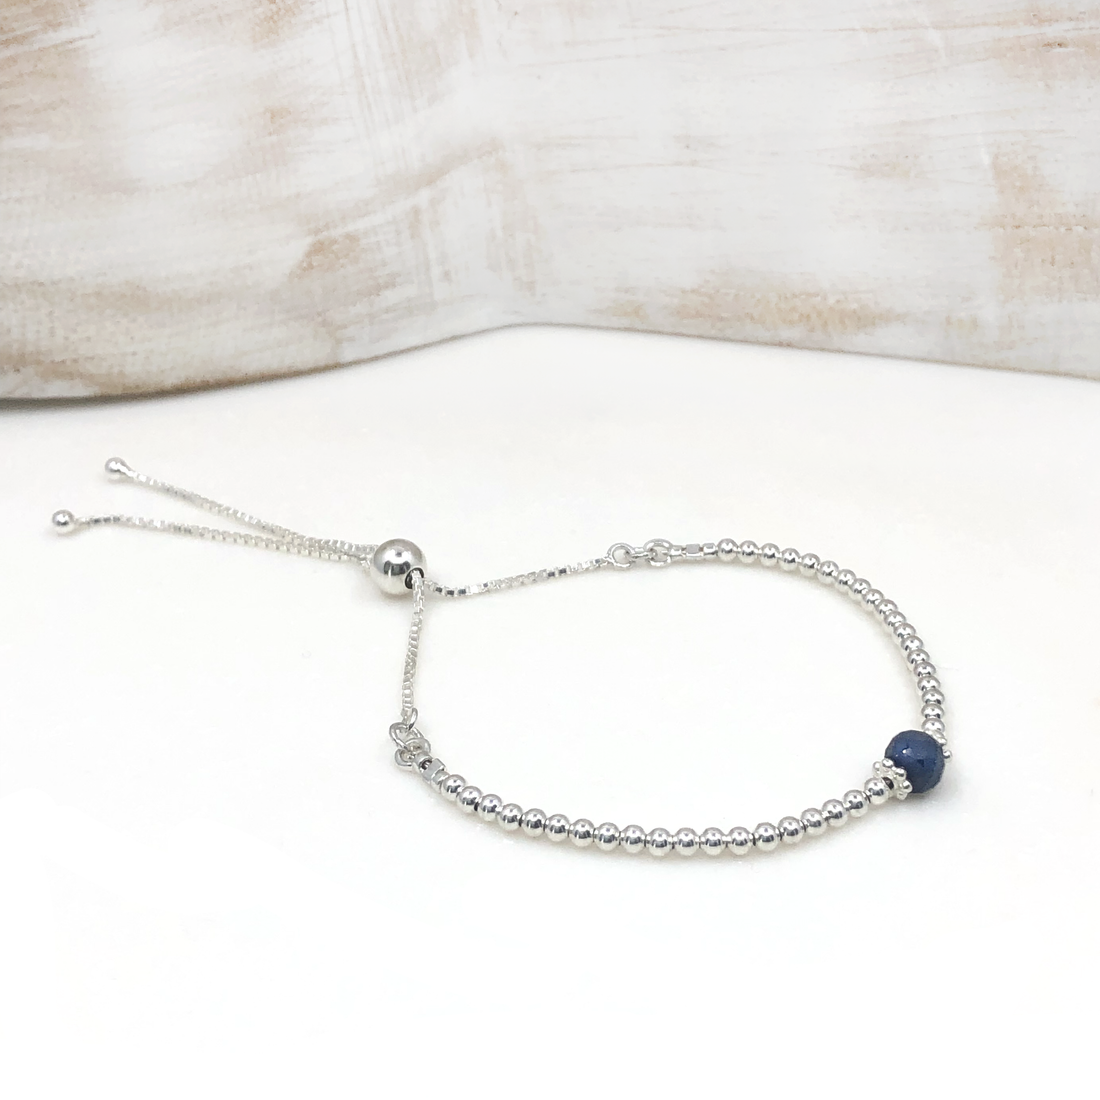 Sapphire sterling silver adjustable beaded bracelet | September birthstone